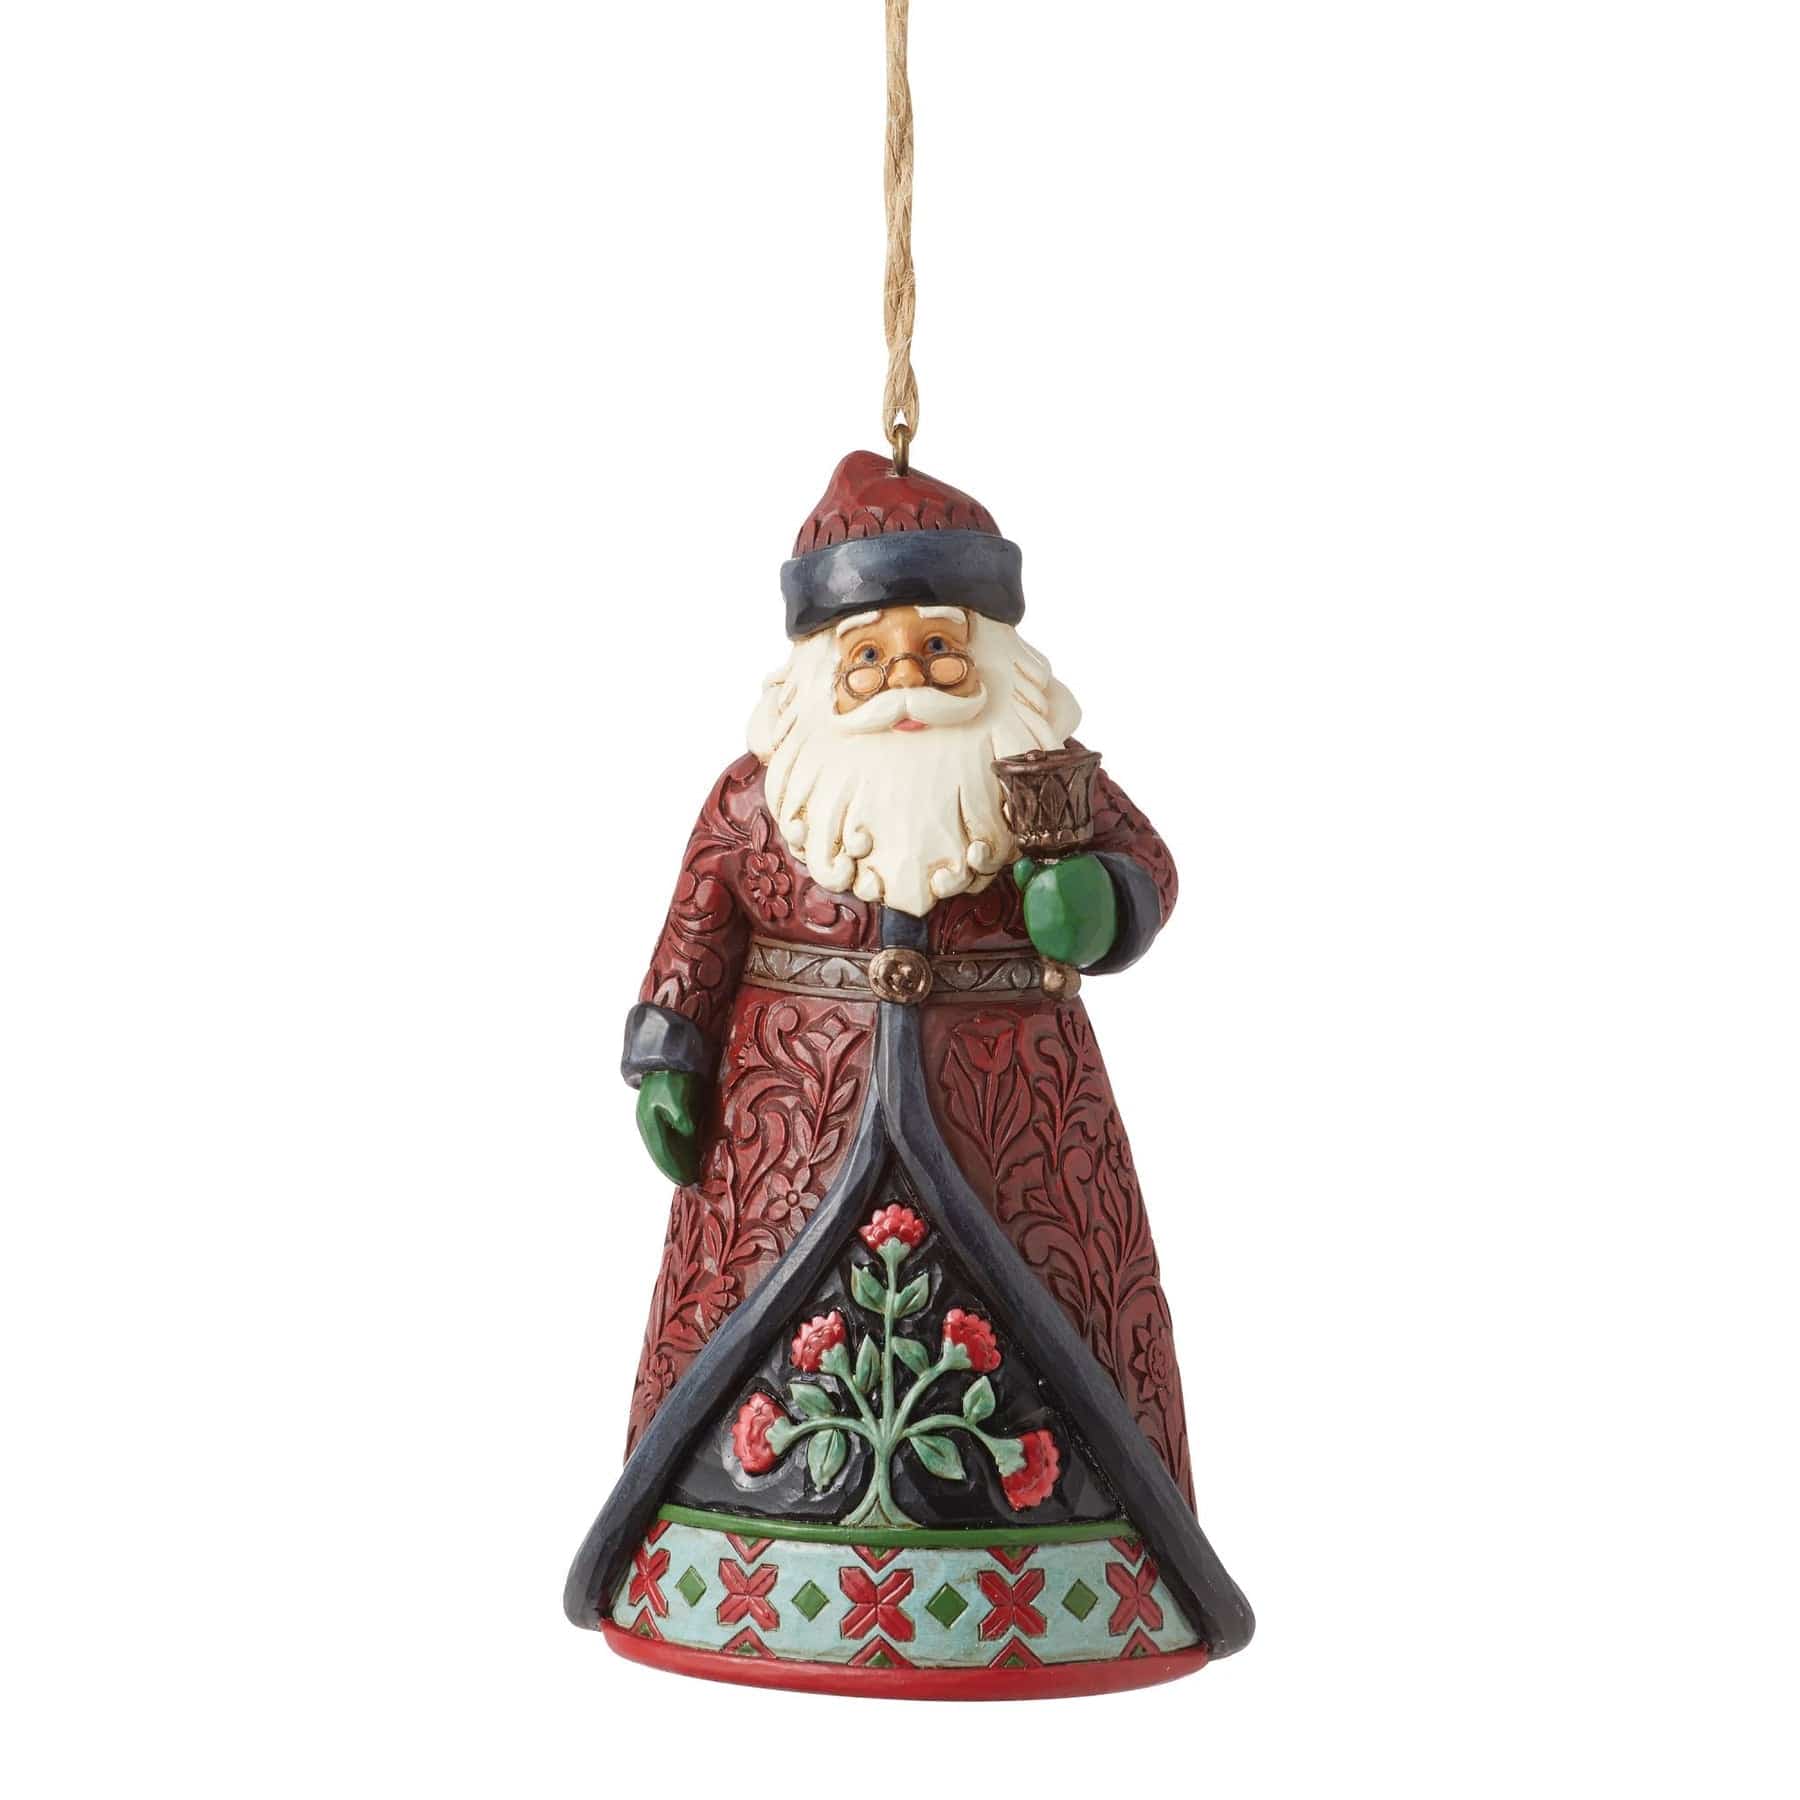 Jim Shore Figurine Jim Shore - Holiday Manor Santa with Bell - Hanging Christmas Figurine